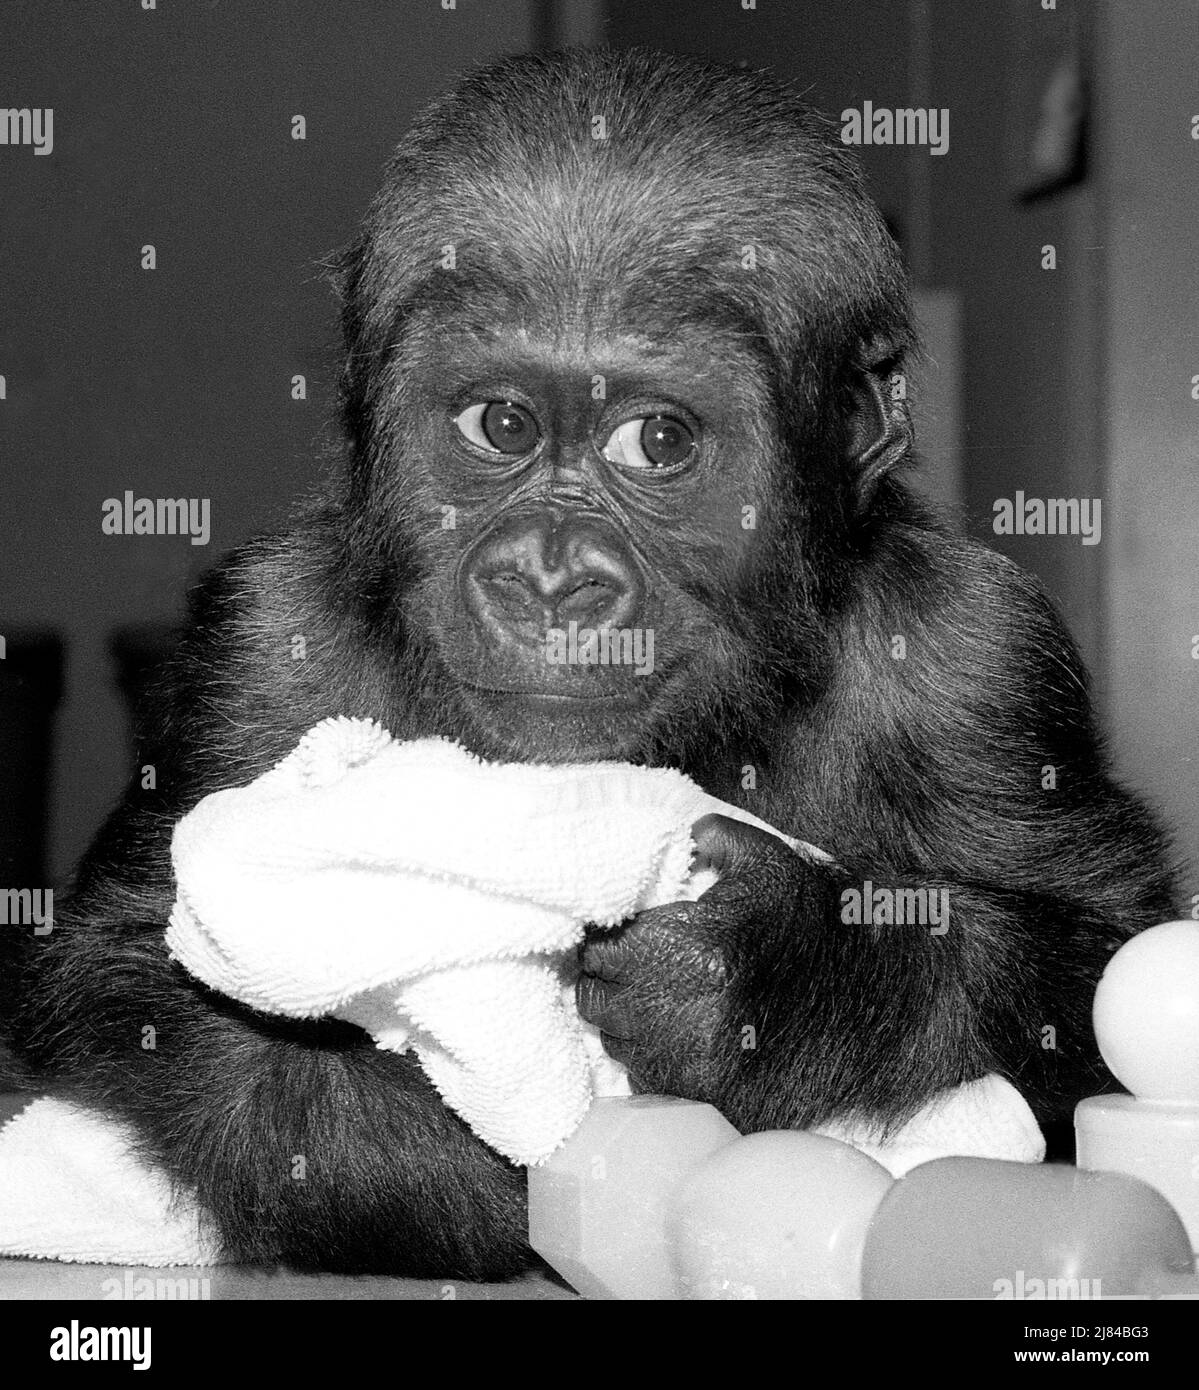 Baby gorilla at a zoo nursery Stock Photo